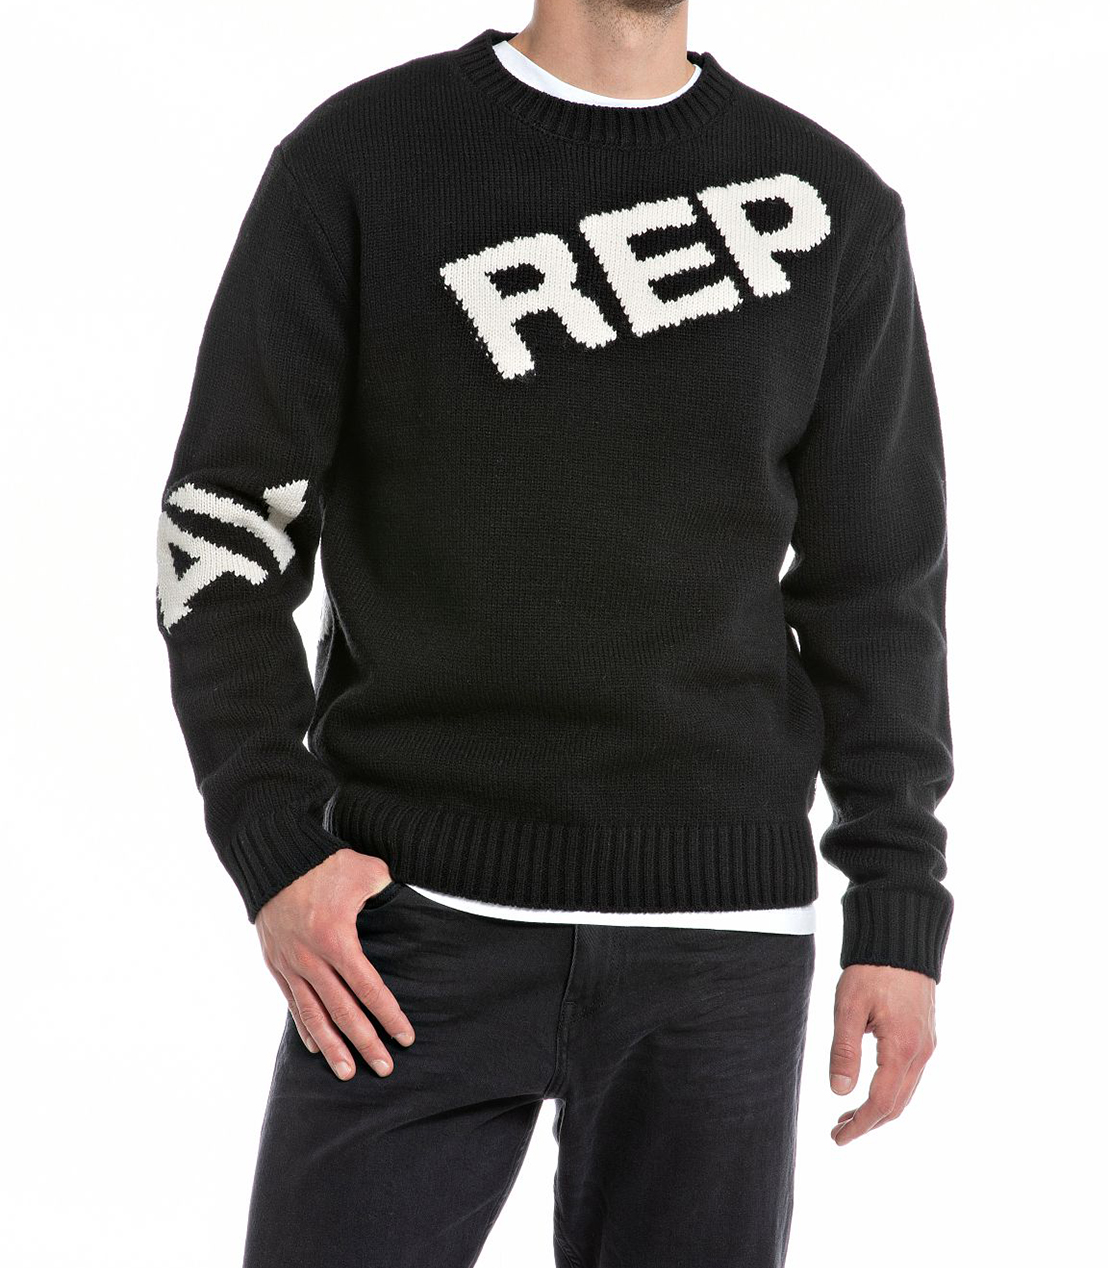 REPLAYロゴジャガードセーター